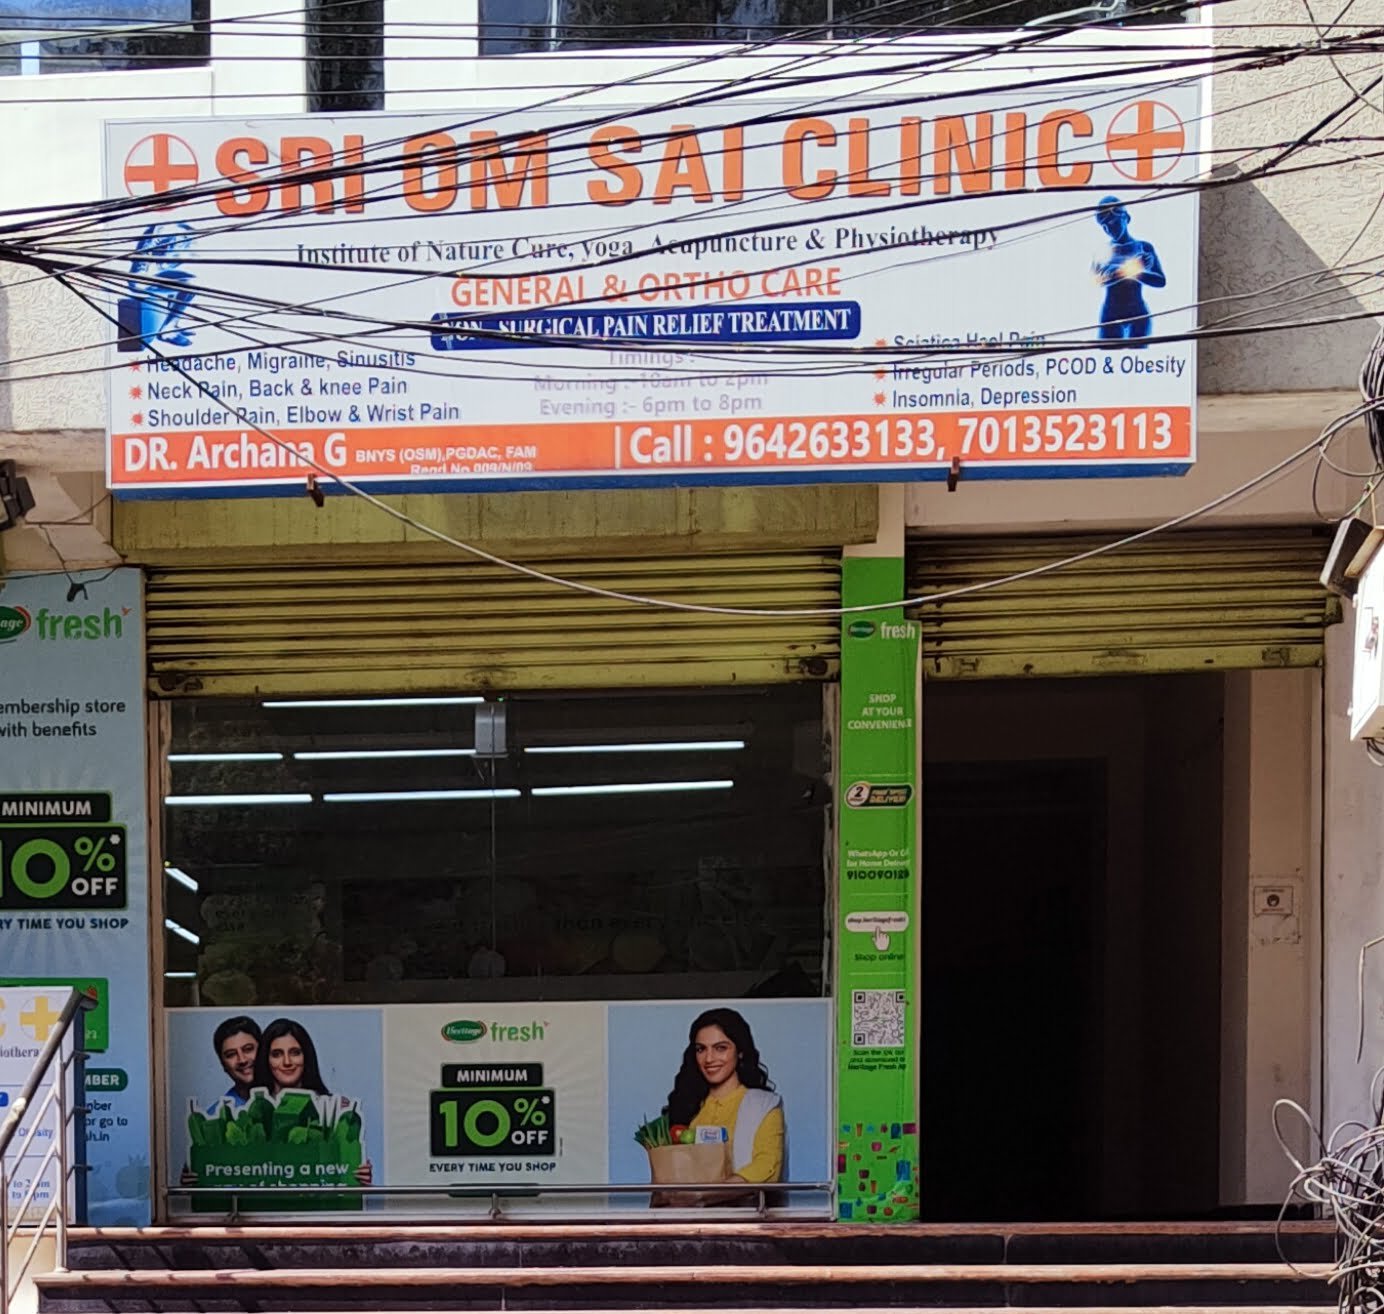 Sri OM Sai Clinic in Saidabad